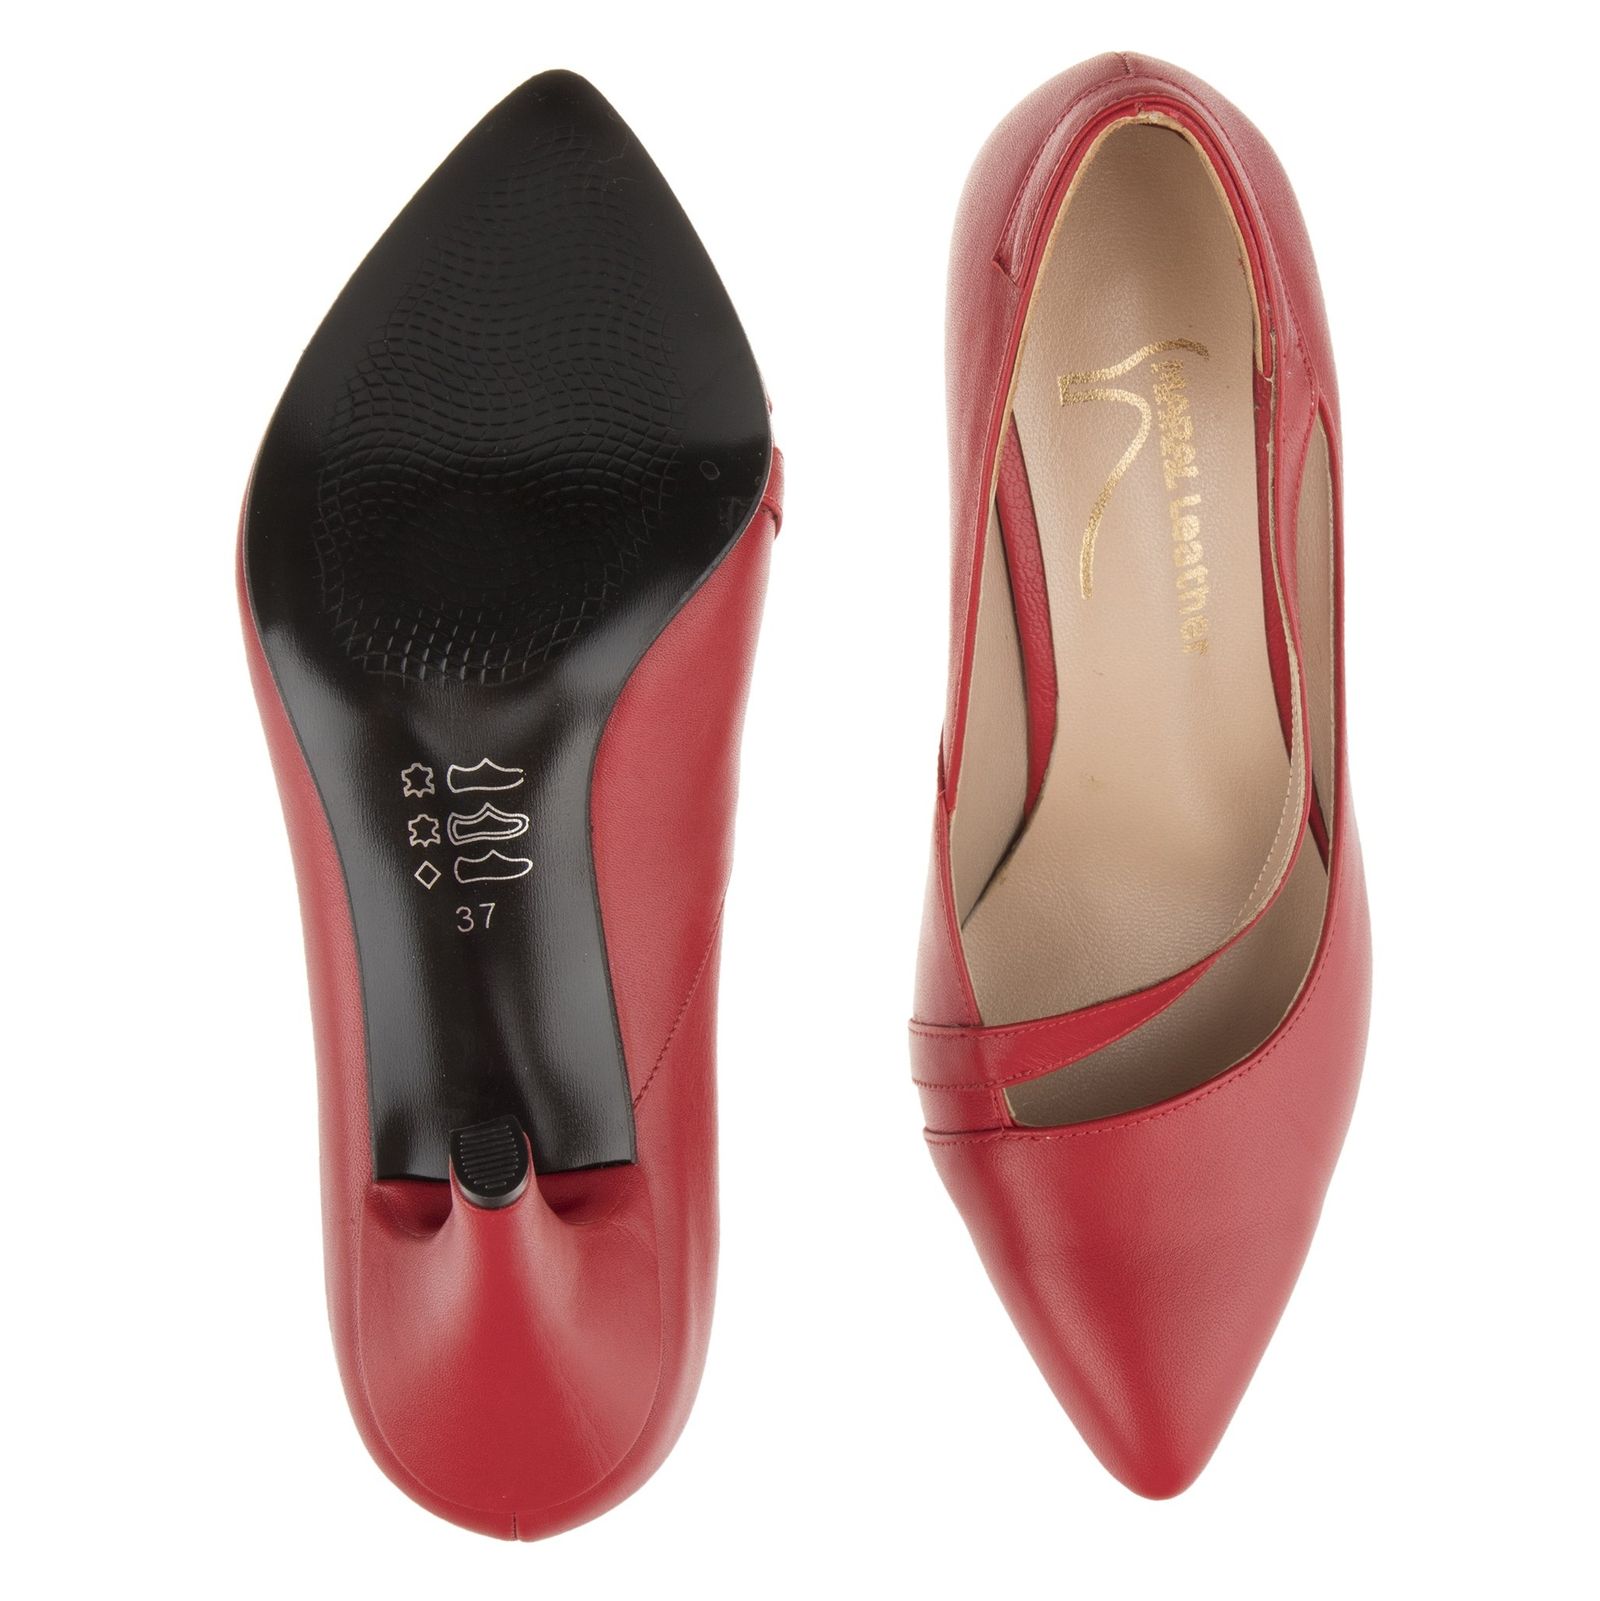 کفش پاشنه بلند چرم زنانه - مارال چرم - قرمز     - 3